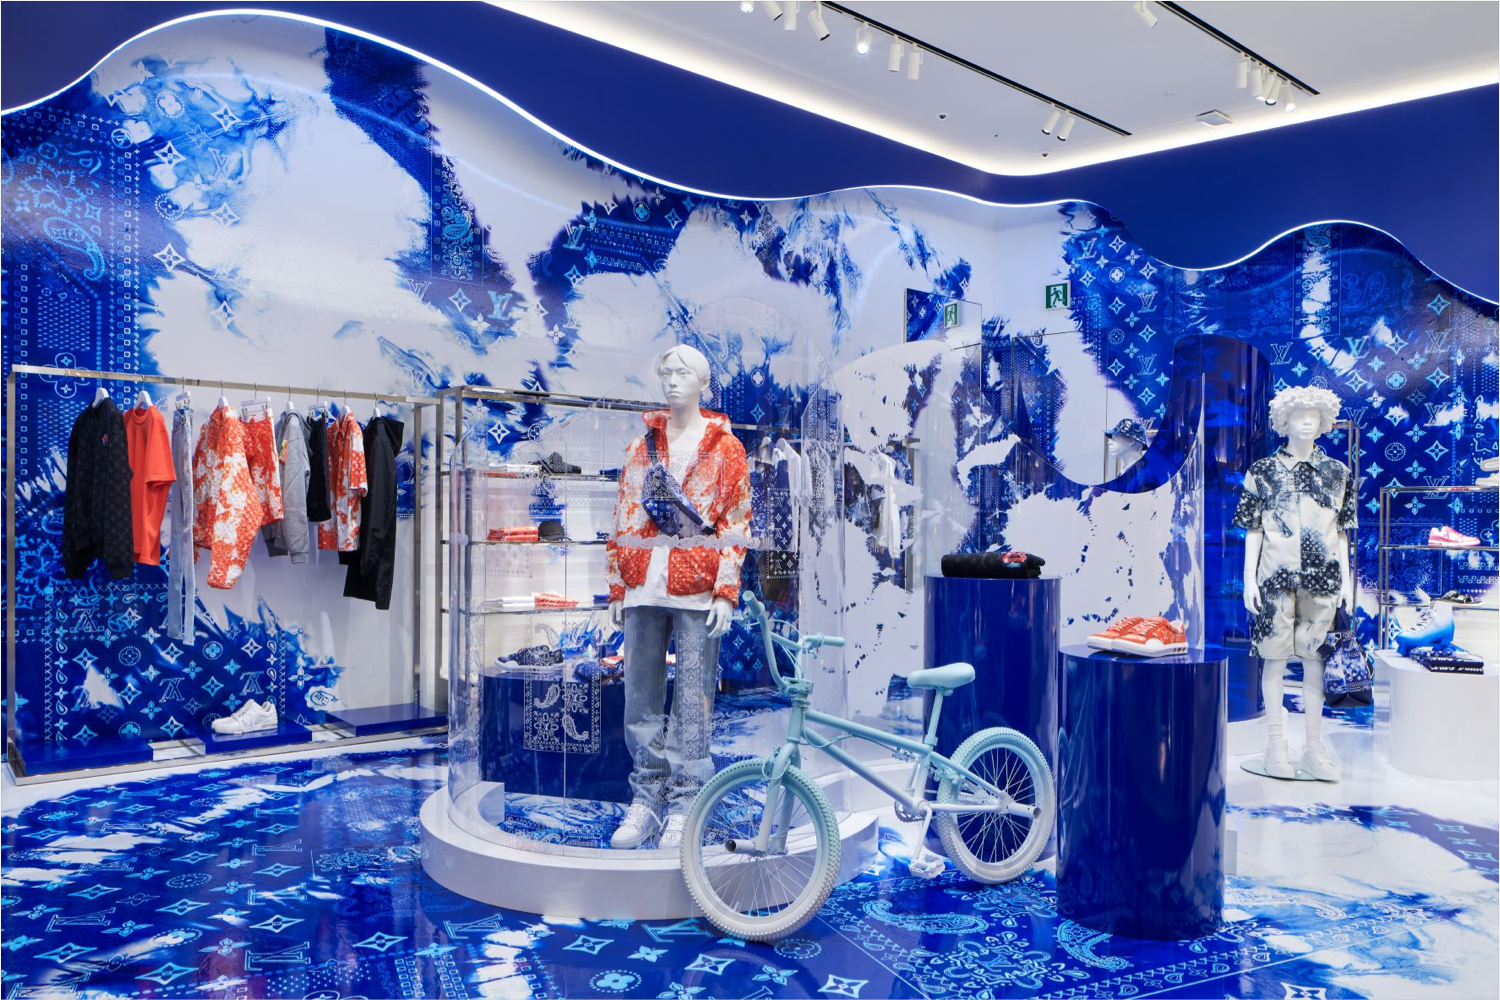 Louis Vuitton Pop-Up Store at @centralembassy #LouisVuitton